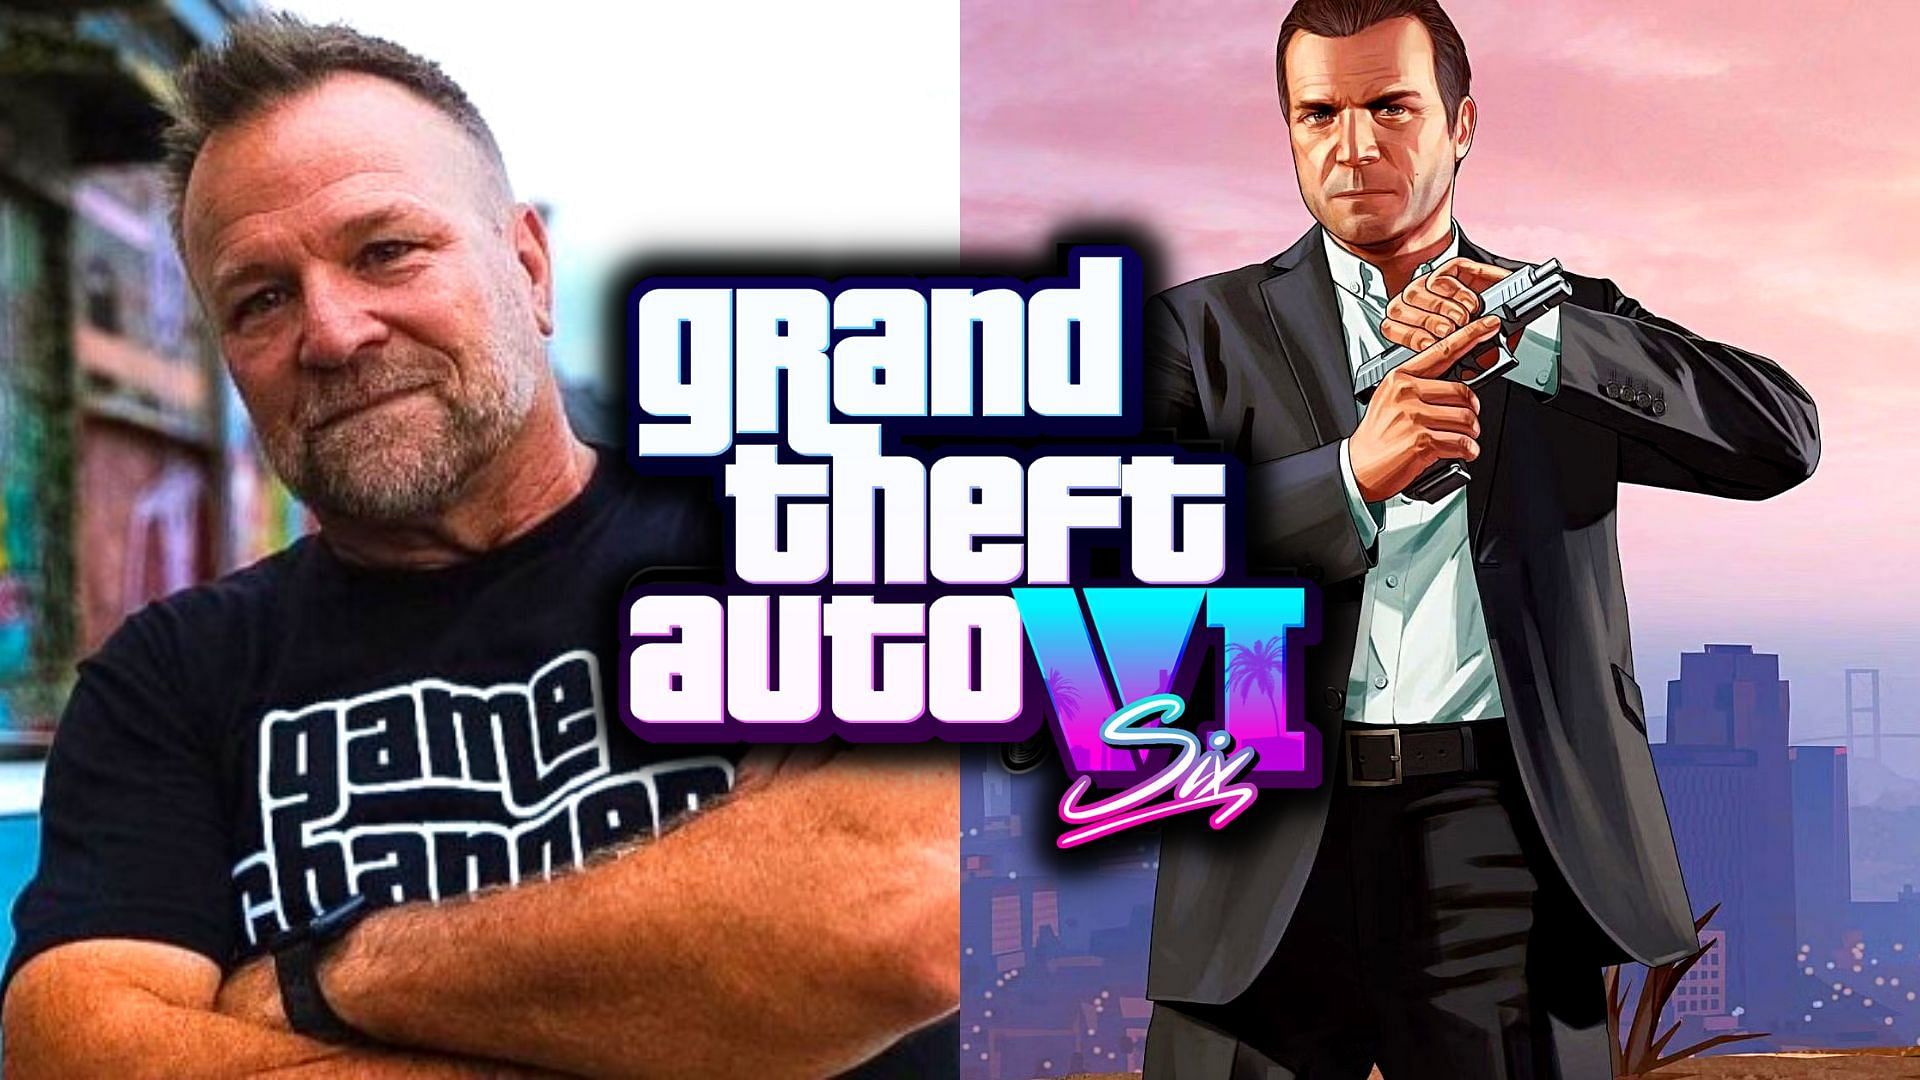 GTA 5 actor Ned Luke promotes GTA 6 after defending Rockstar for the swatting incident